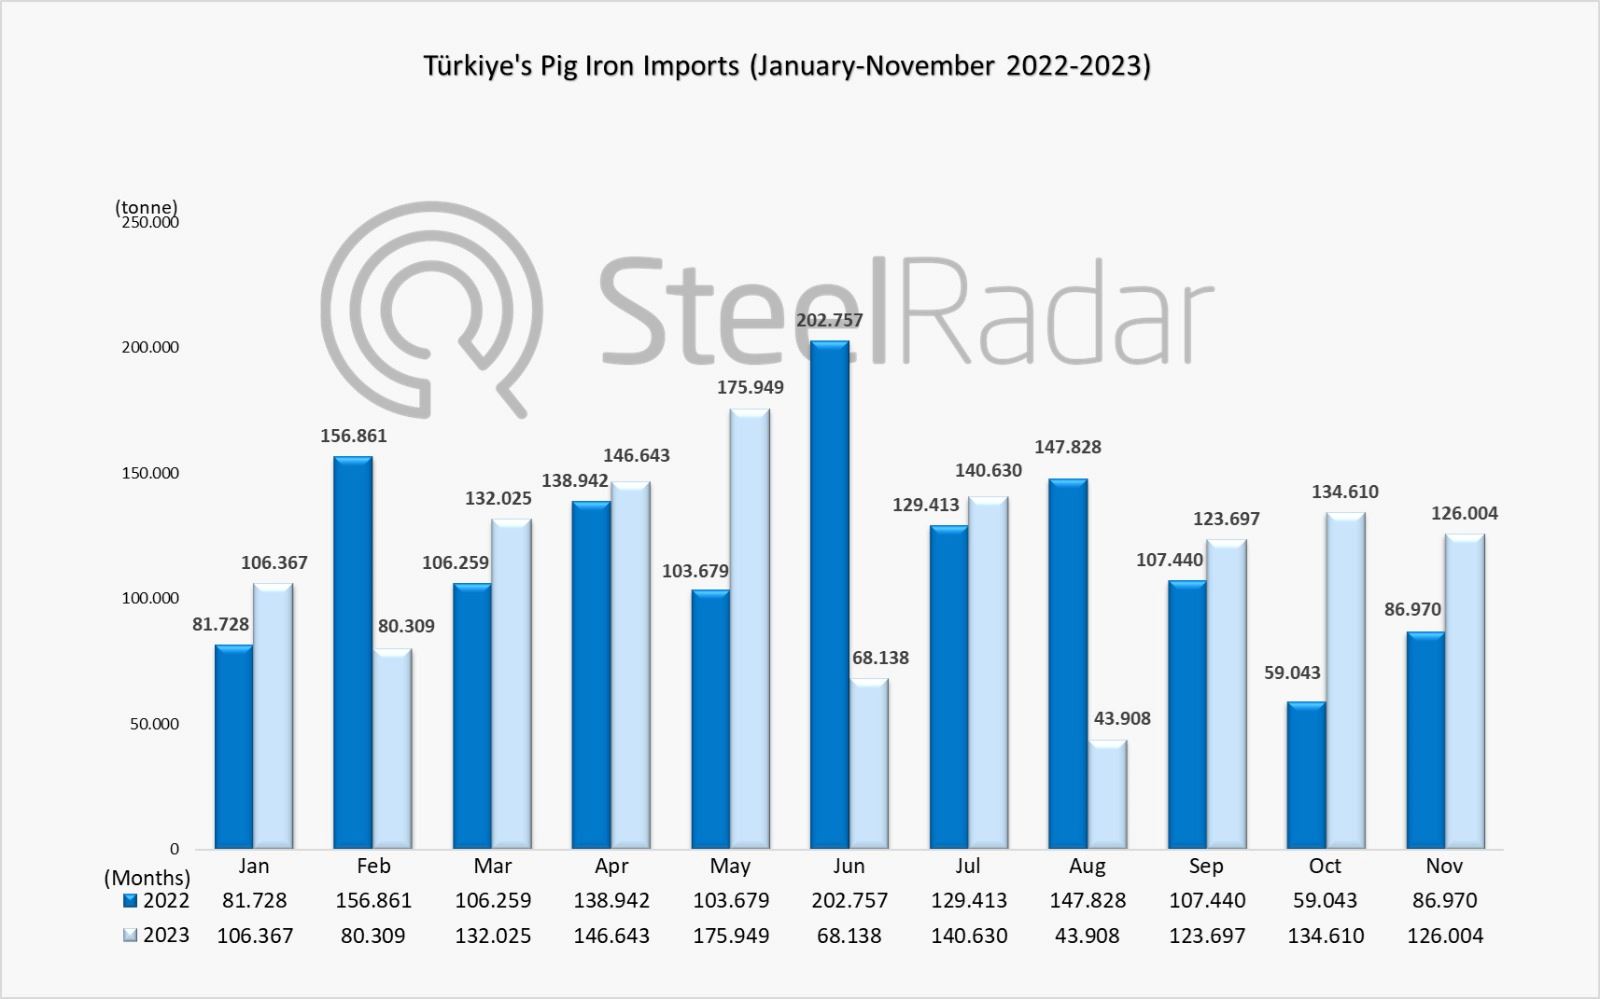 Türkiye's pig iron imports increased by 44.88% in November 2023